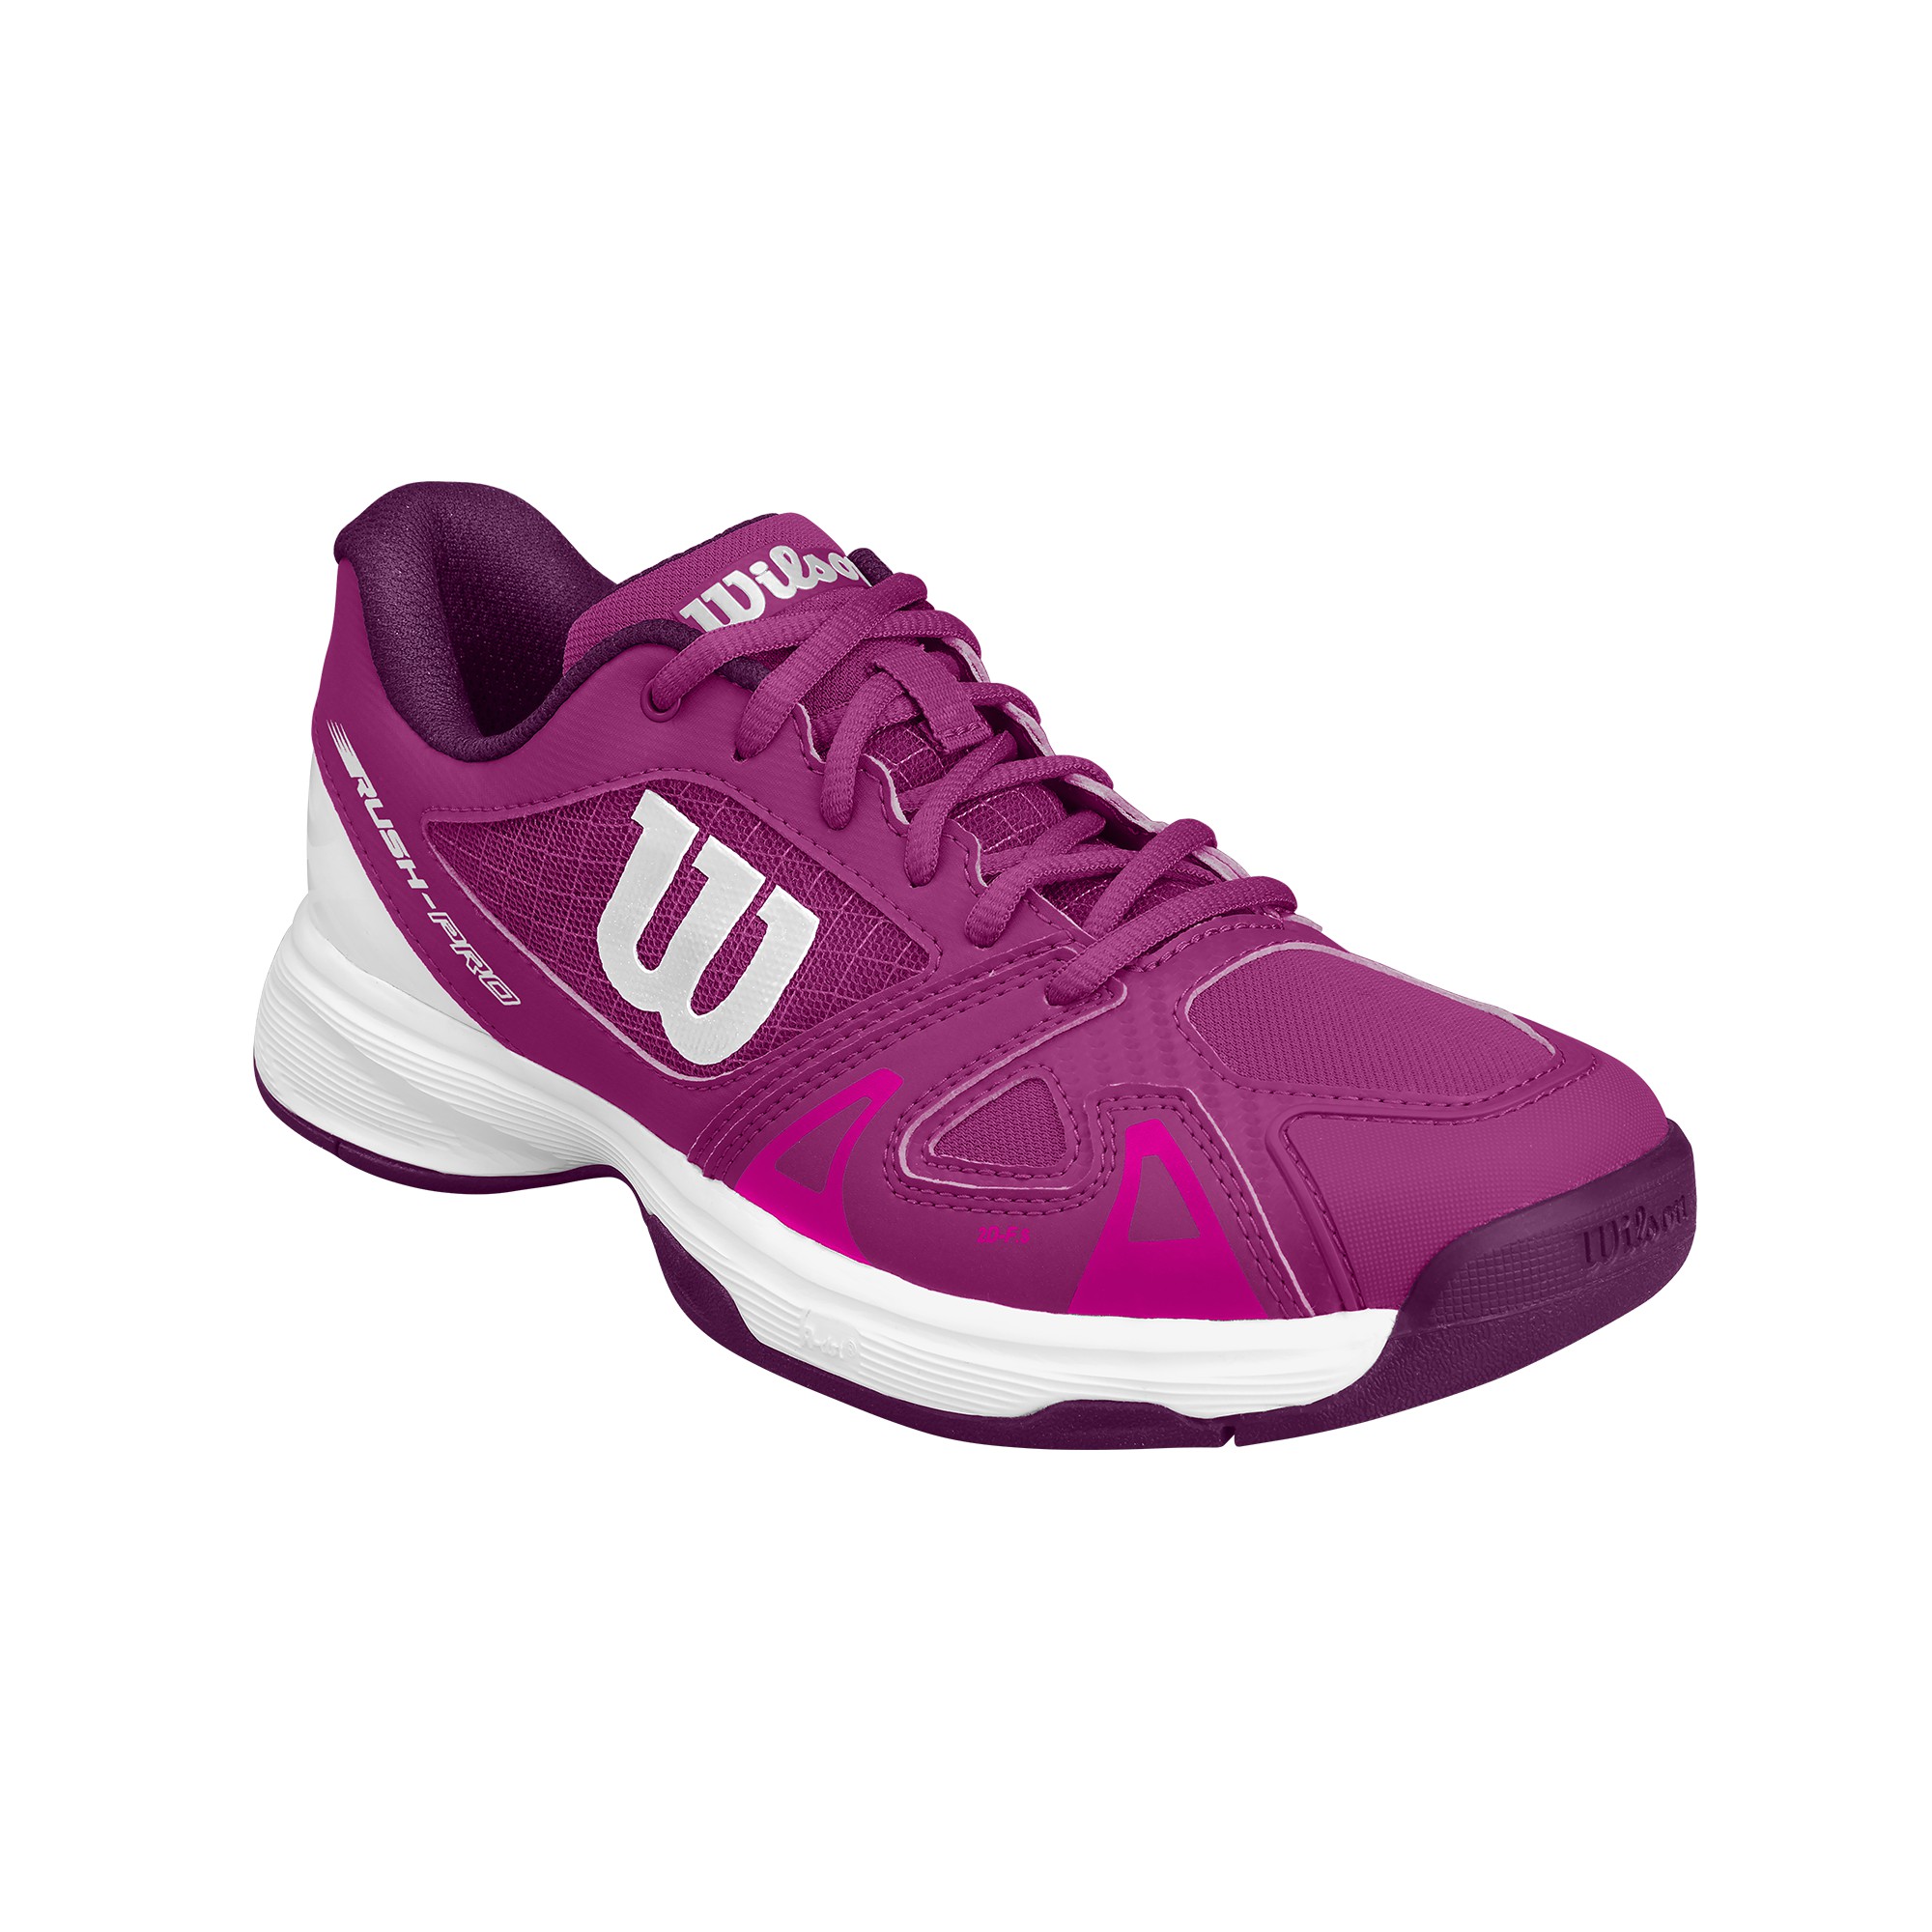 dark purple tennis shoes